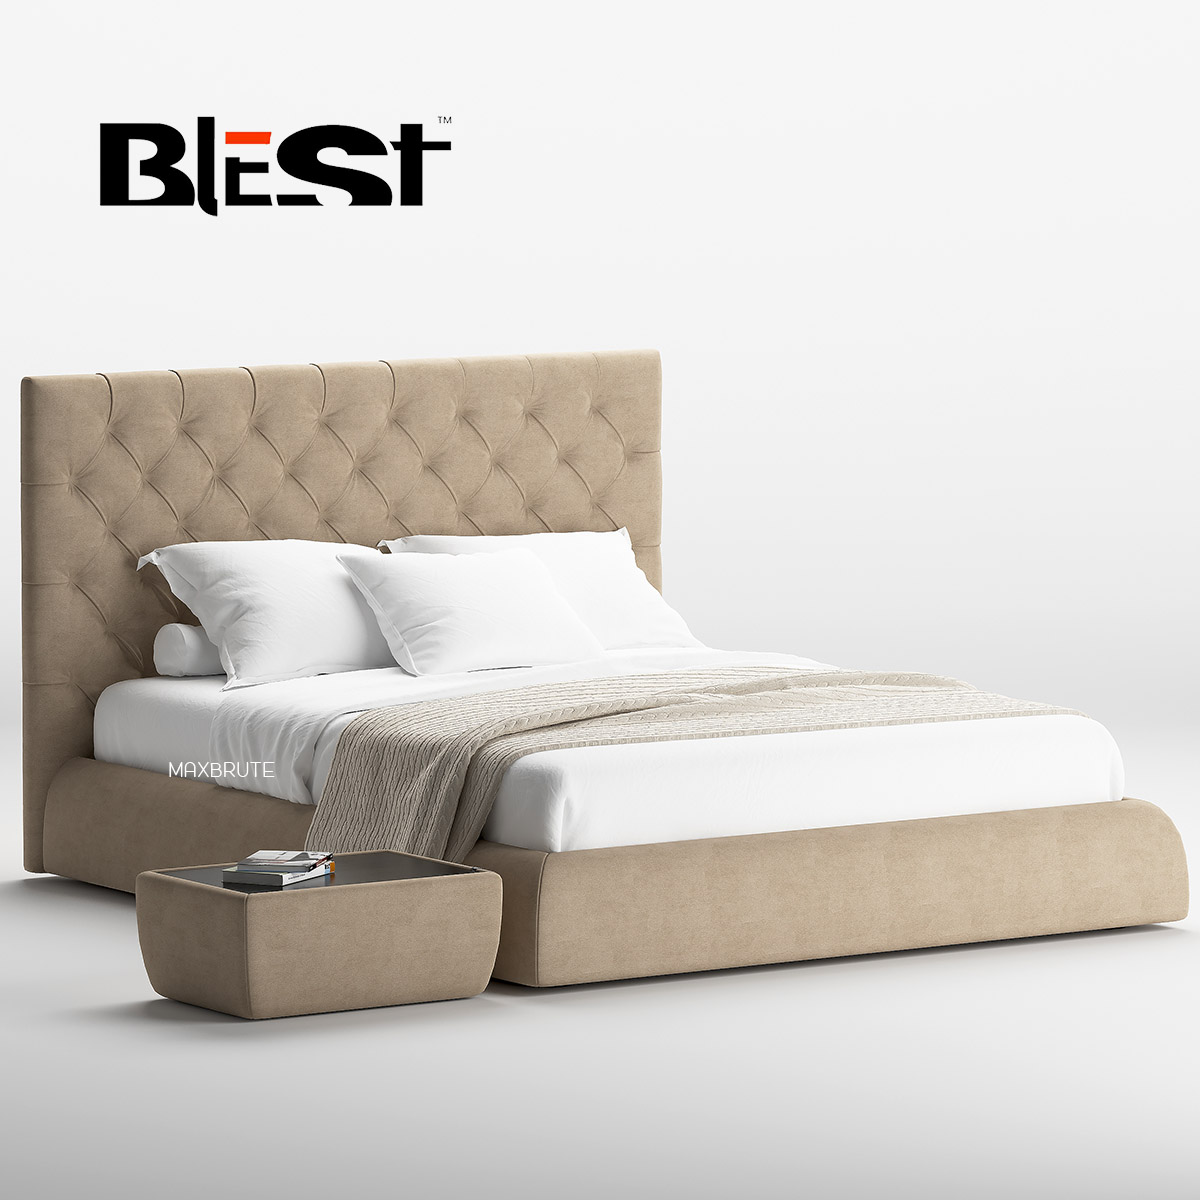 Blest Beatris Bed Classic 3dmodel 3dsmax Maxbrute Furniture